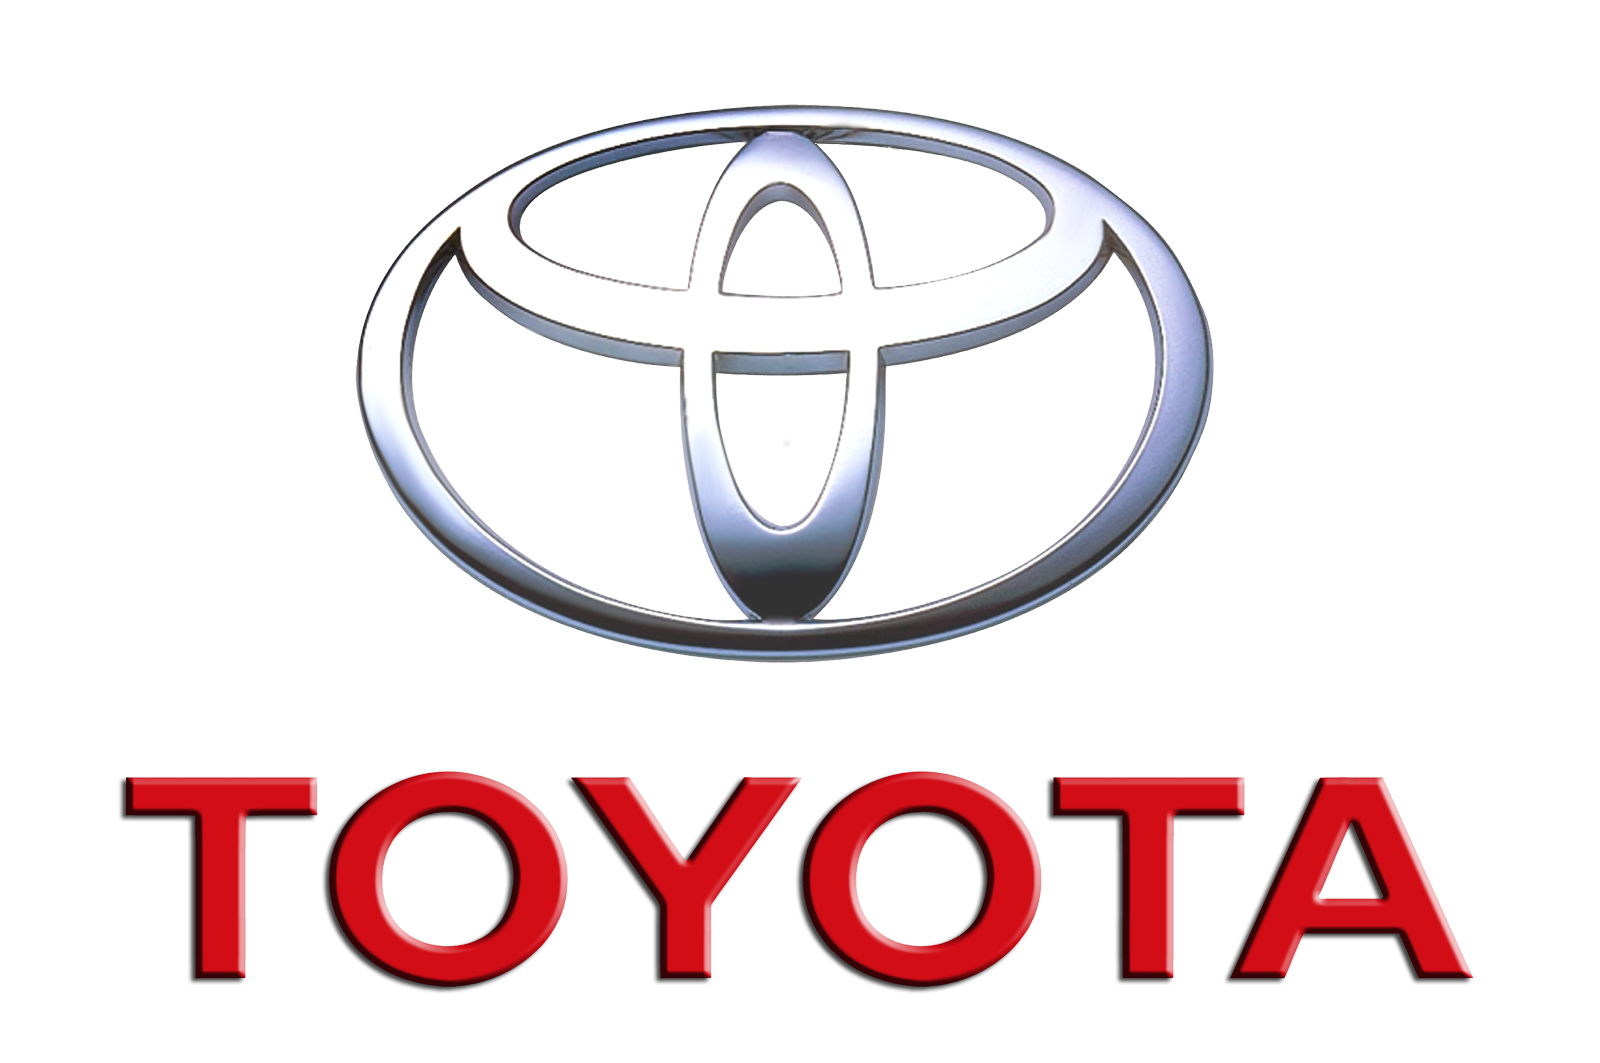 Toyota car symbol